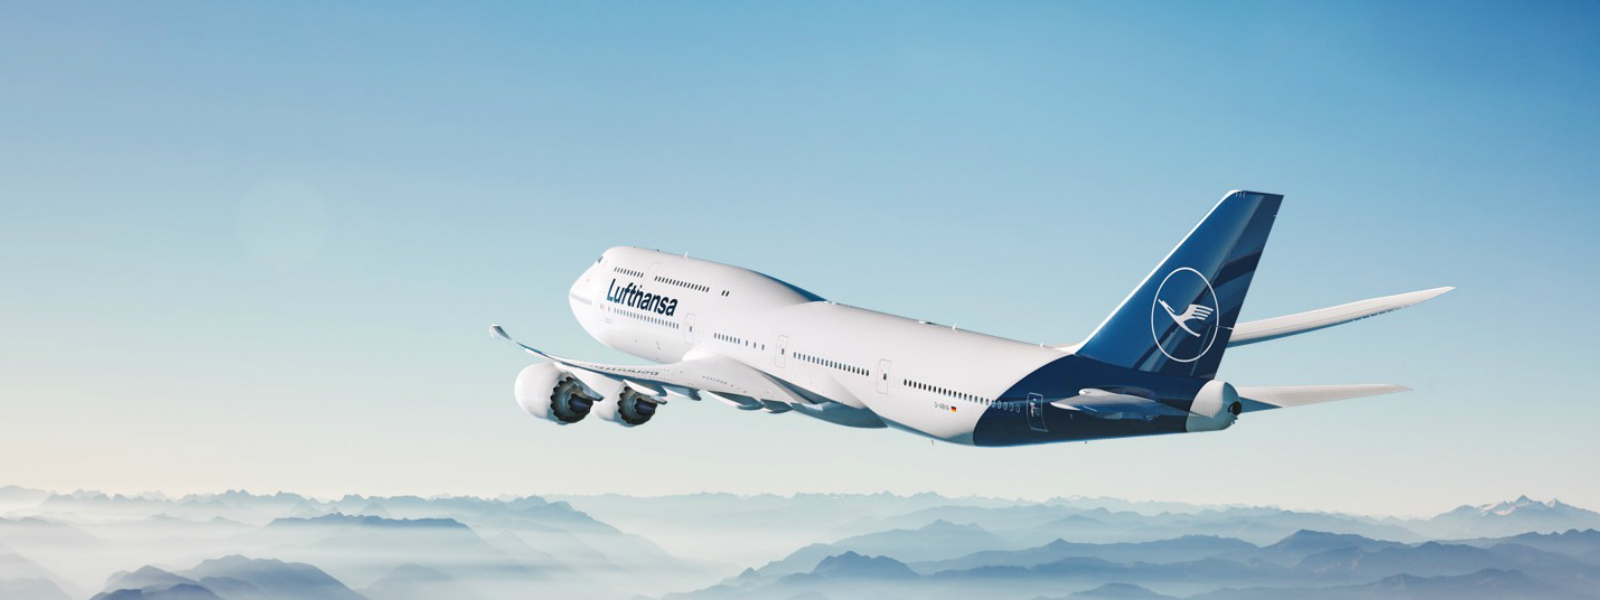 Lufthansa Airlines cancels 800 flights